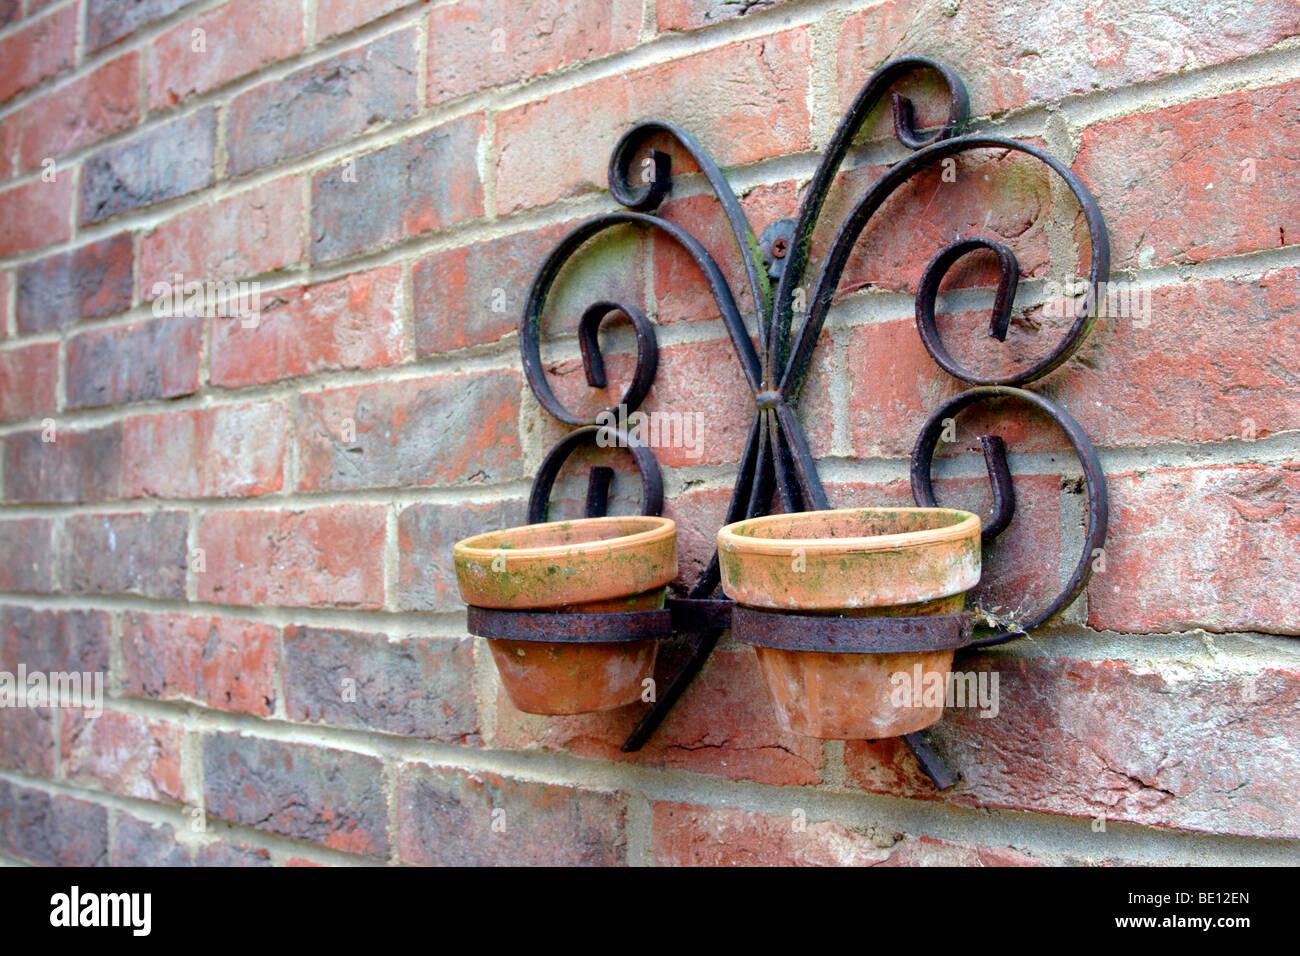 Empty terracotta pots hanging on wall in metal bracket Stock Photo